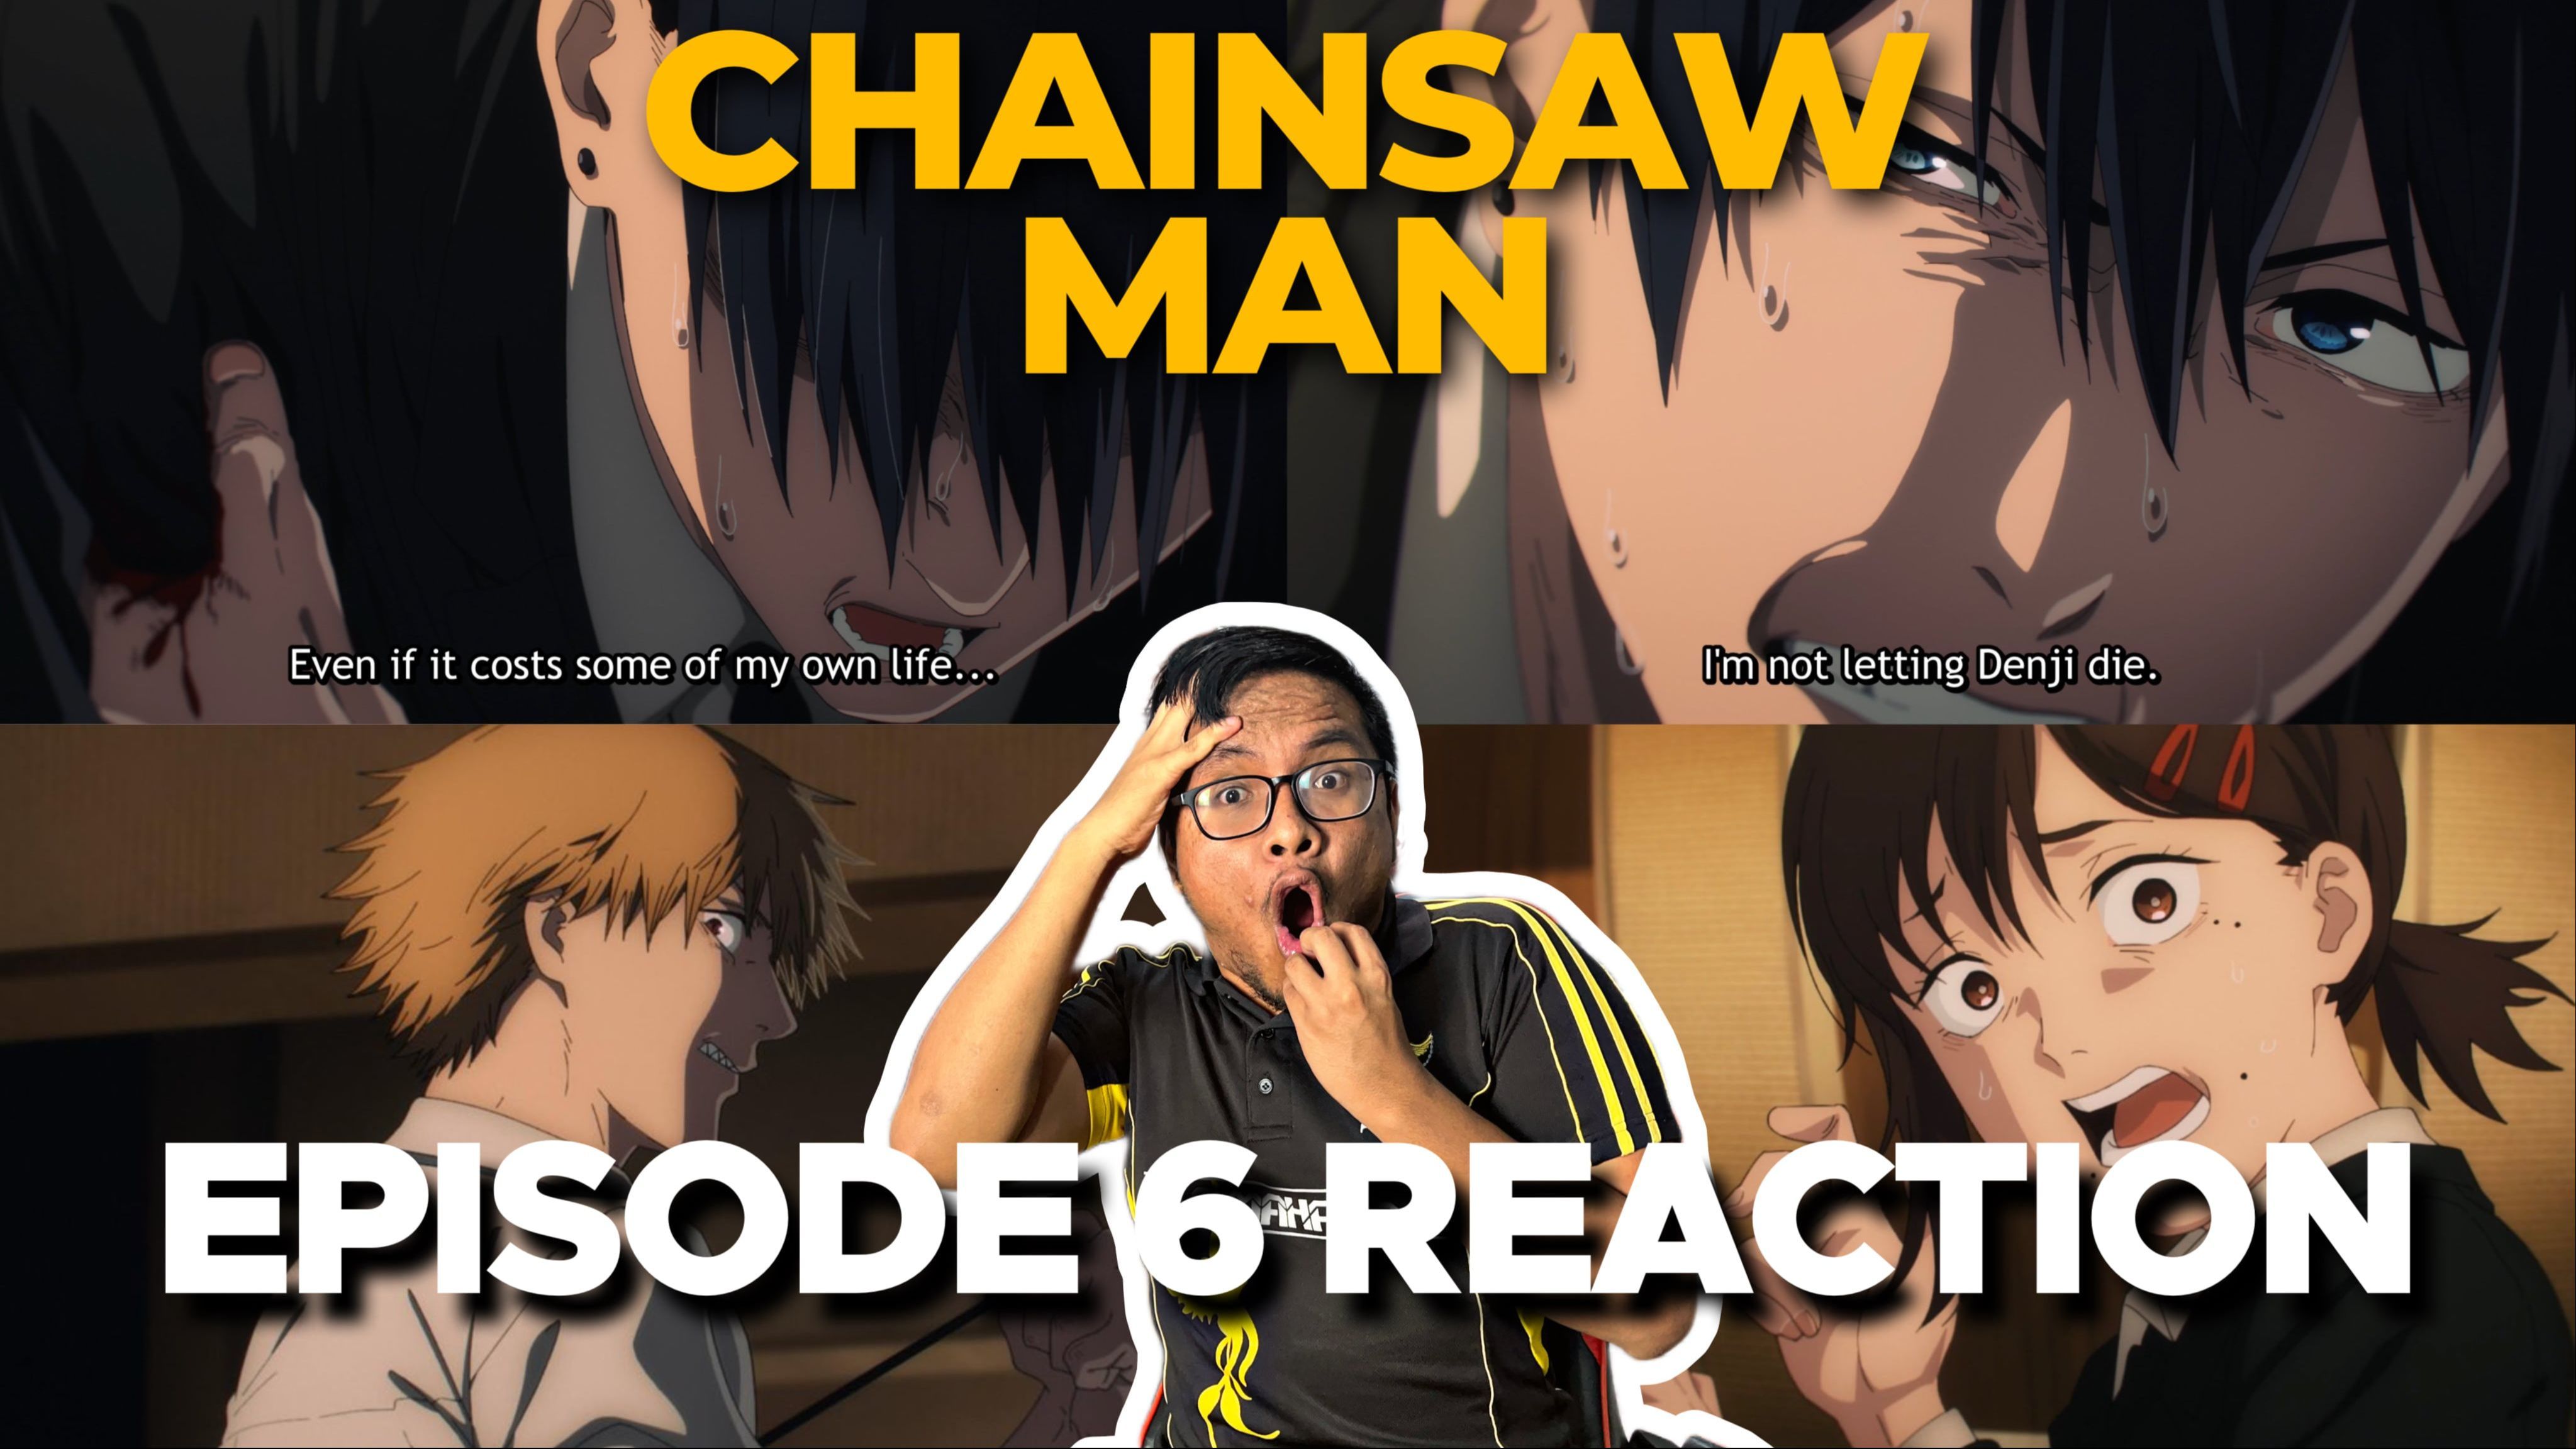 Chainsaw Man Episode 6 Reaction